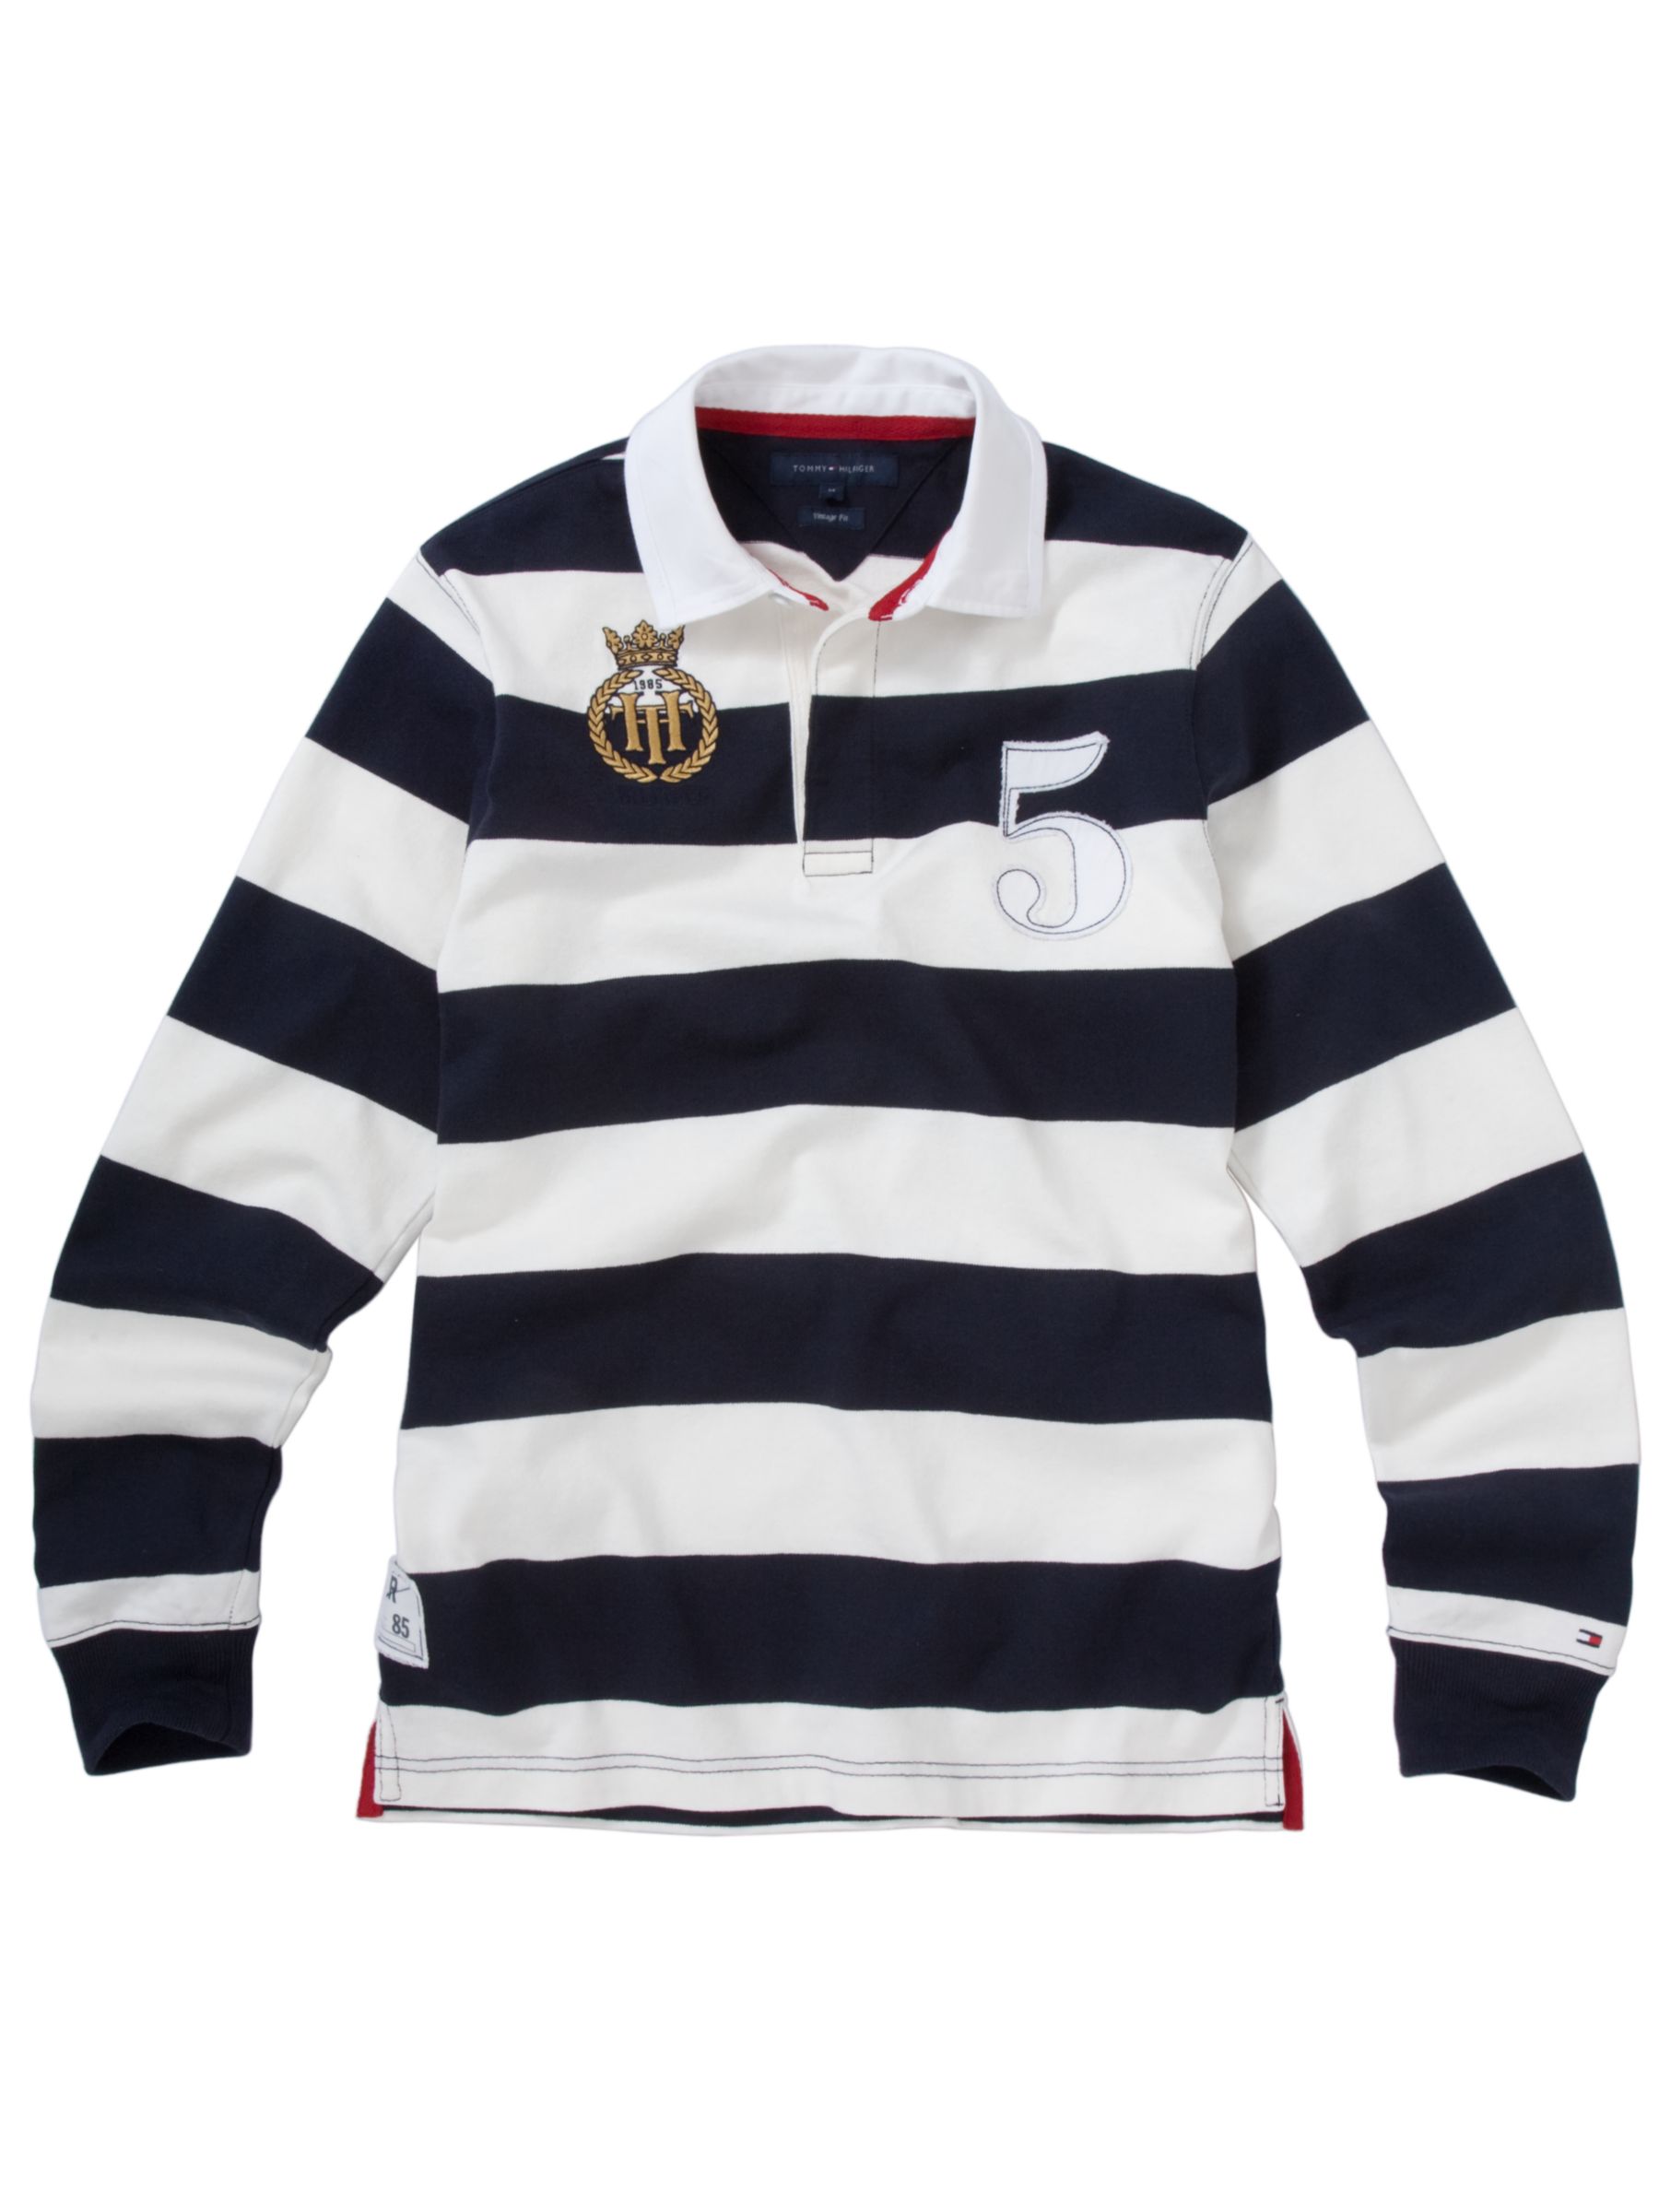 Tommy Hilfiger Stripe Rugby Shirt, Midnight blue